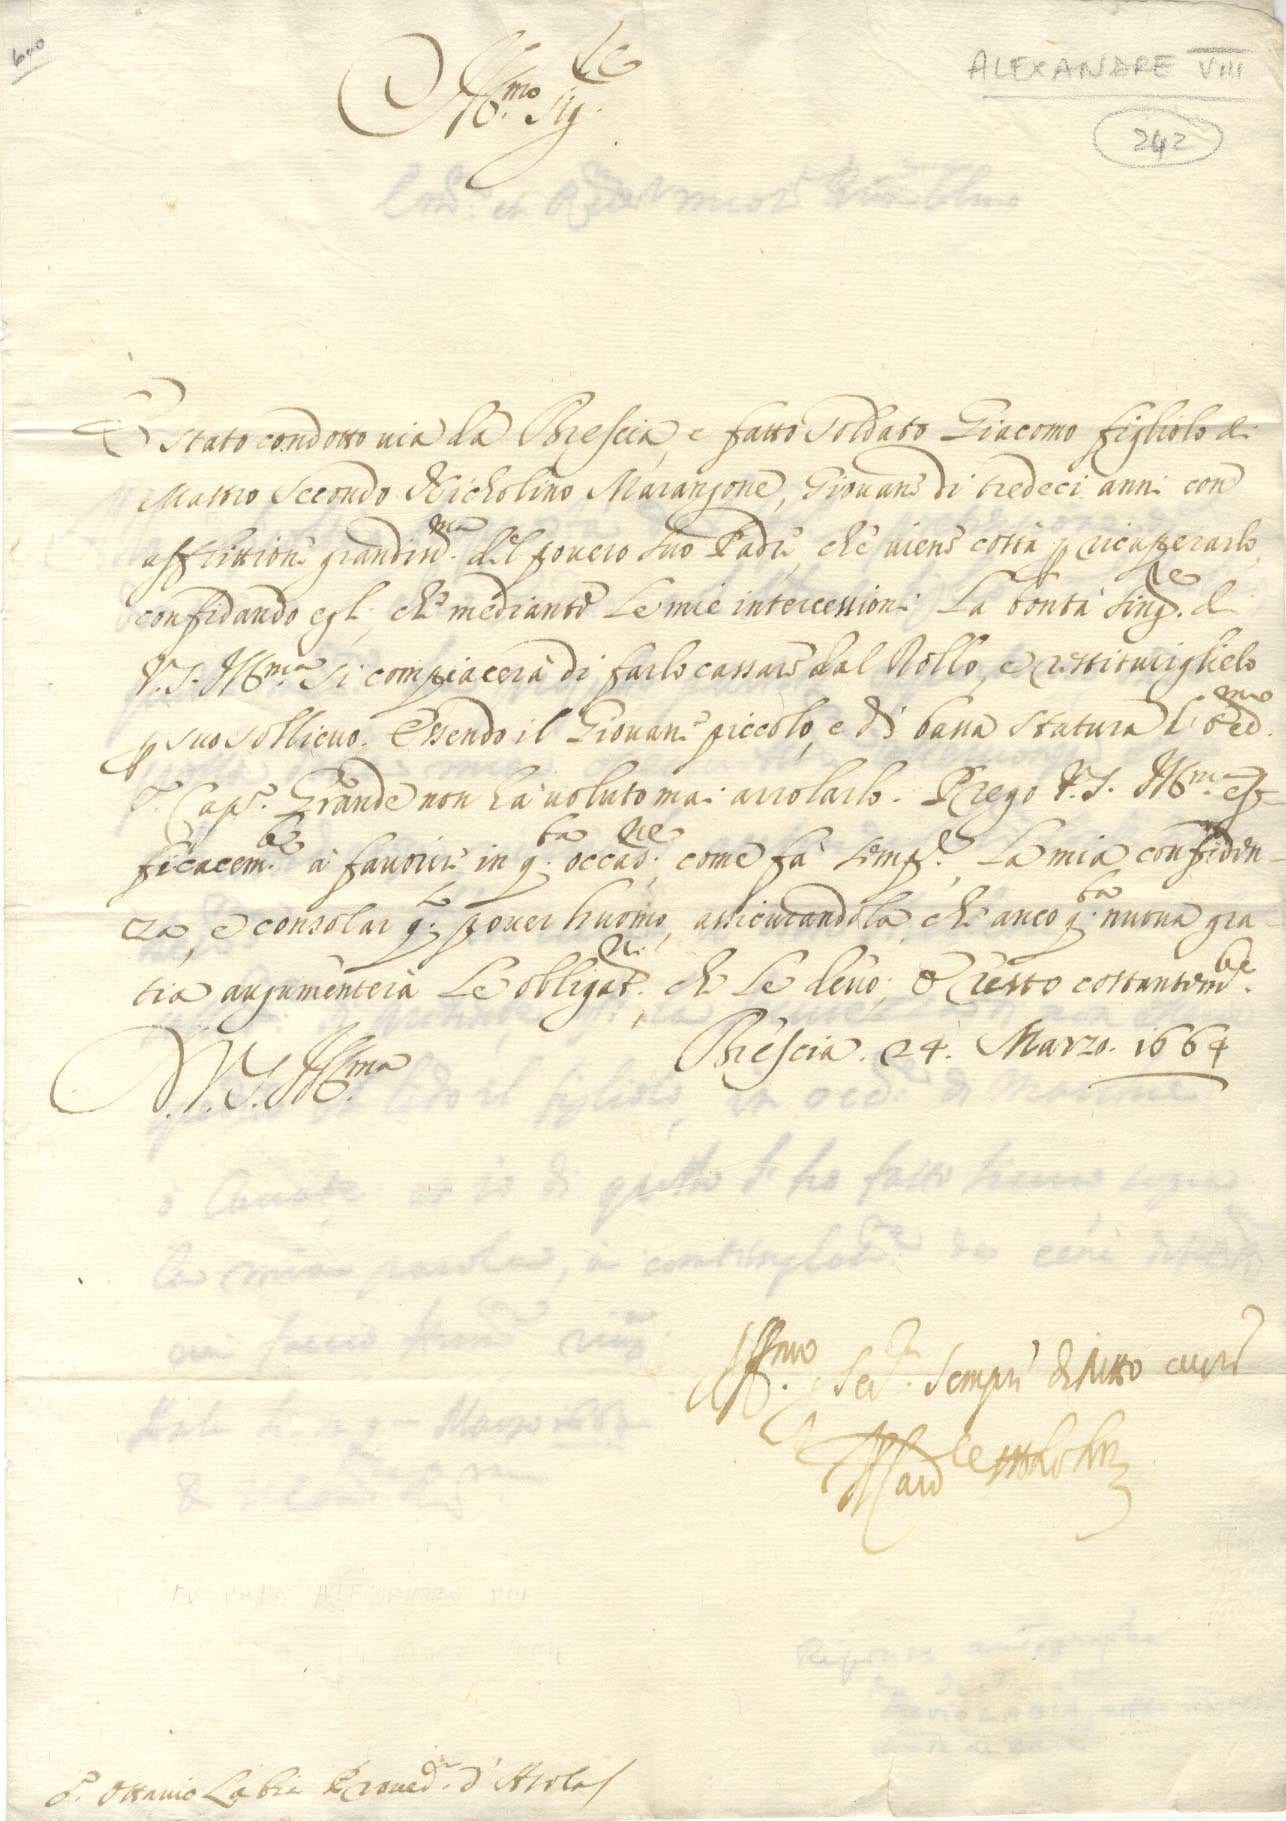  Pope Alexander VIII Autograph Autogramm | ID 7411247513749